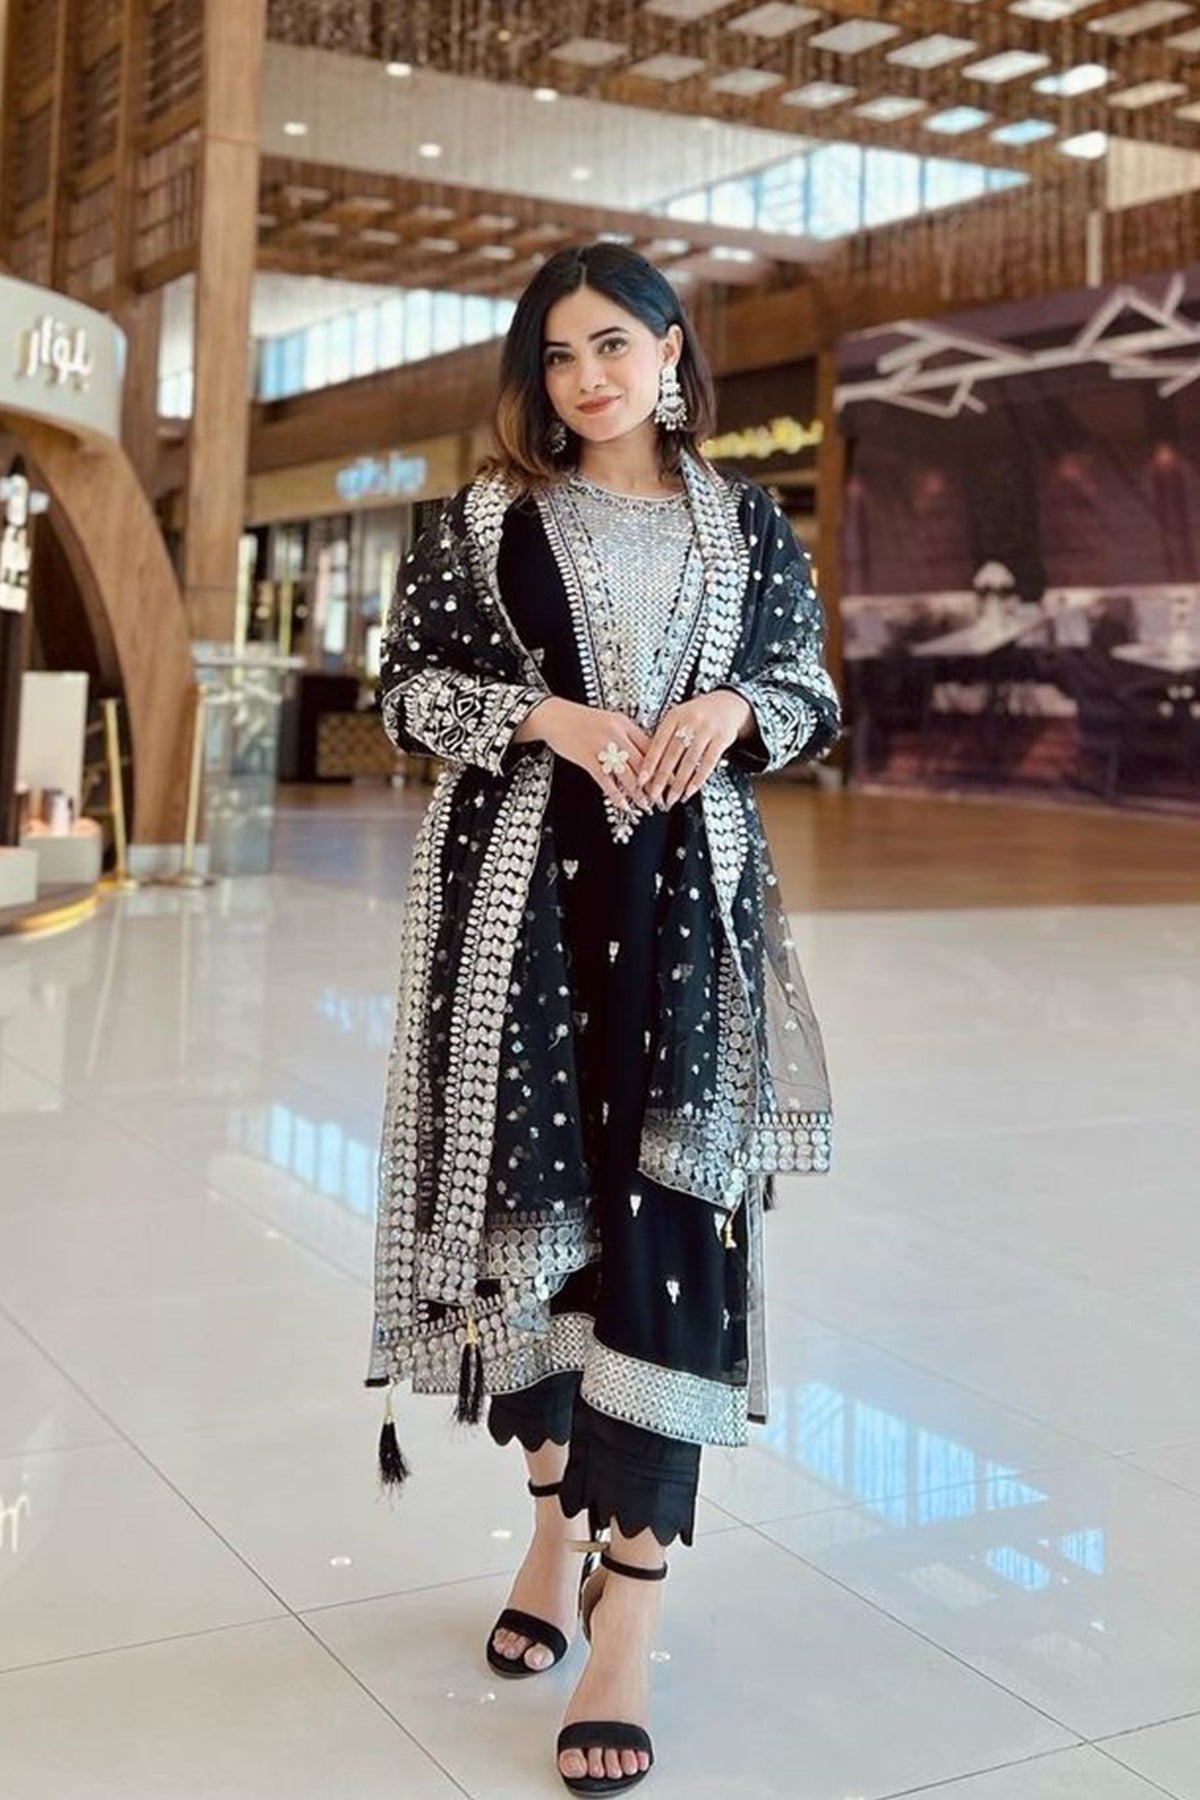 Latest) Designer Sharara Dress For Wedding Party 2022